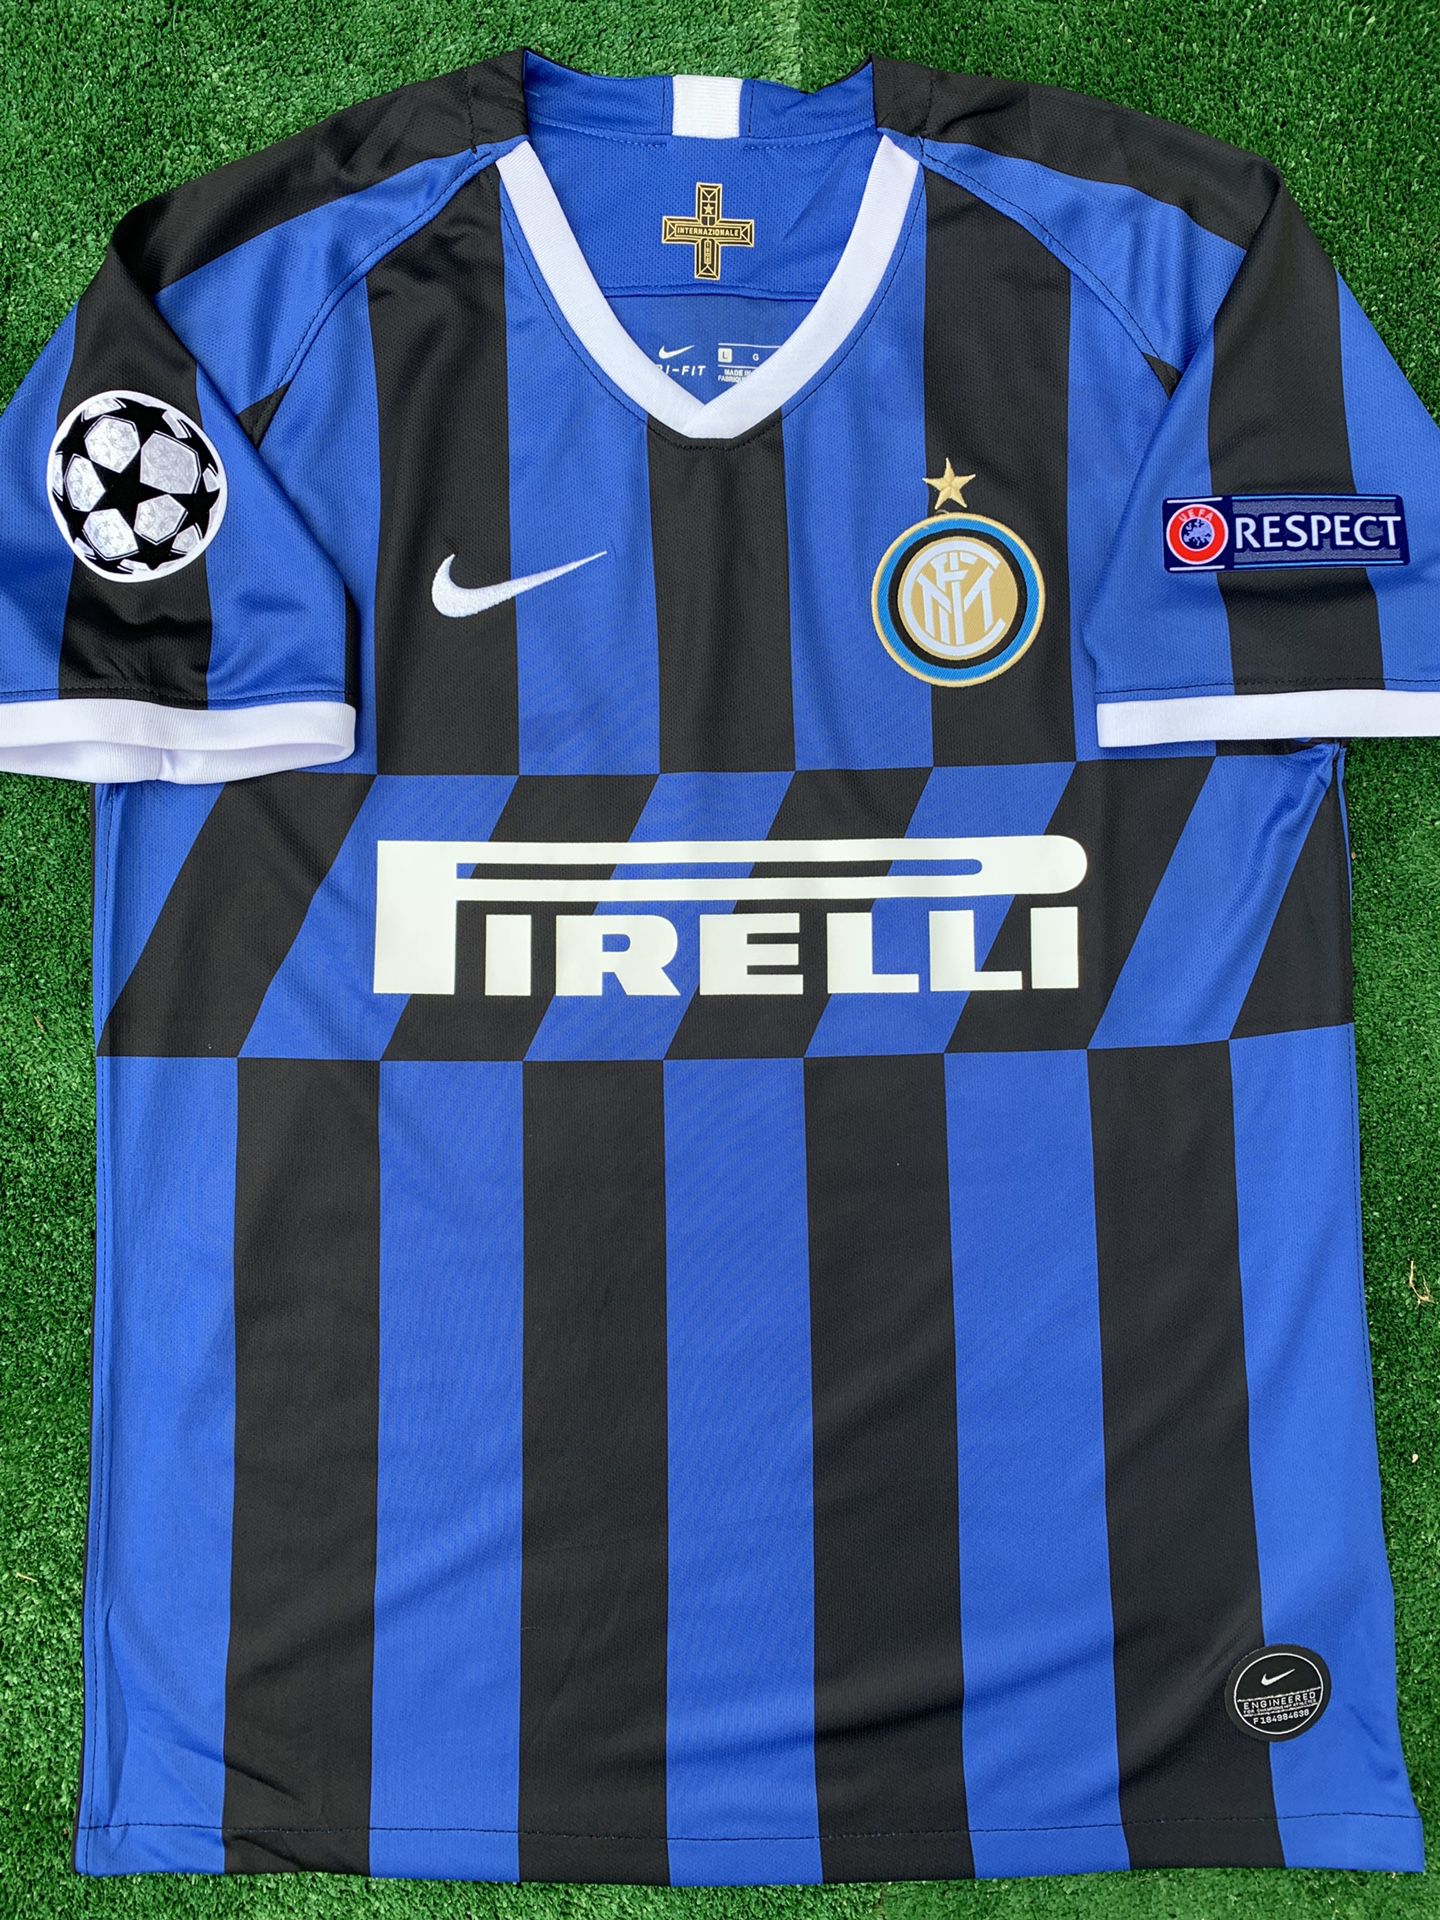 2019/20 Inter Milan soccer jersey